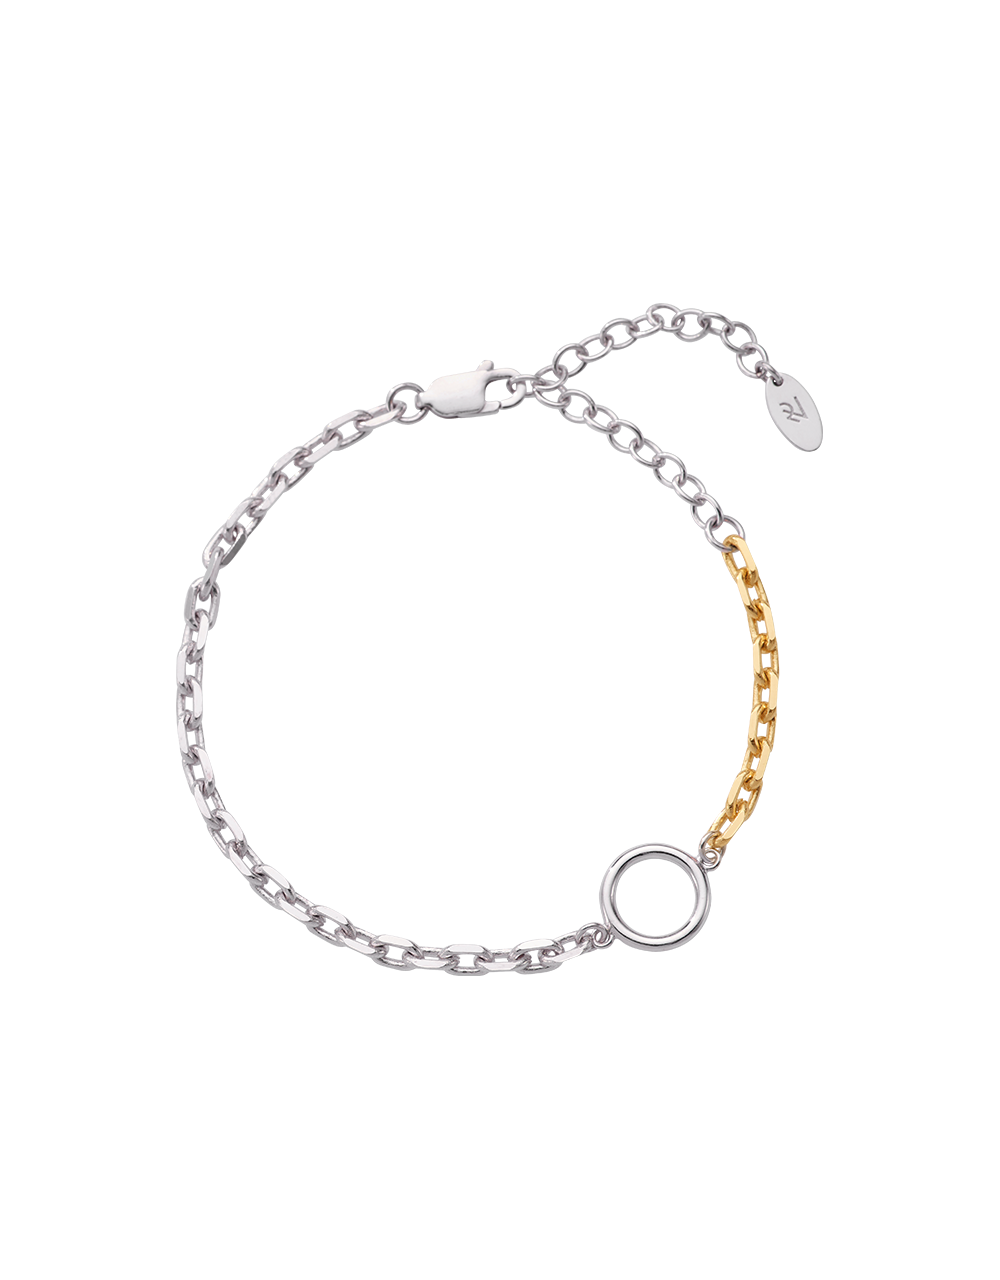 two-toned diamond cut chain bracelet